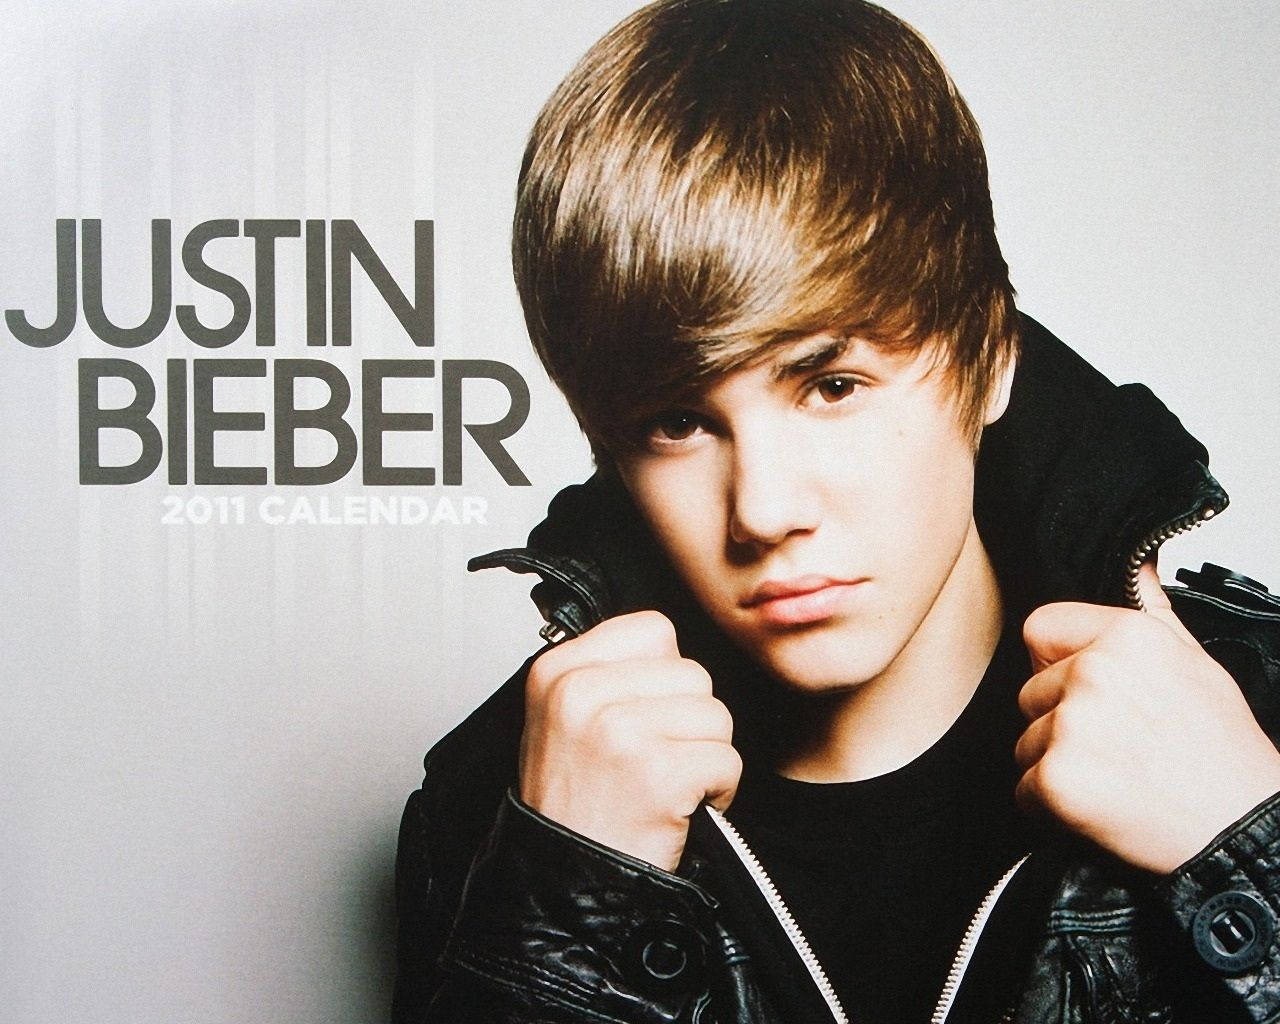 Justin Bieber 2011 Calendar Cover Wallpaper